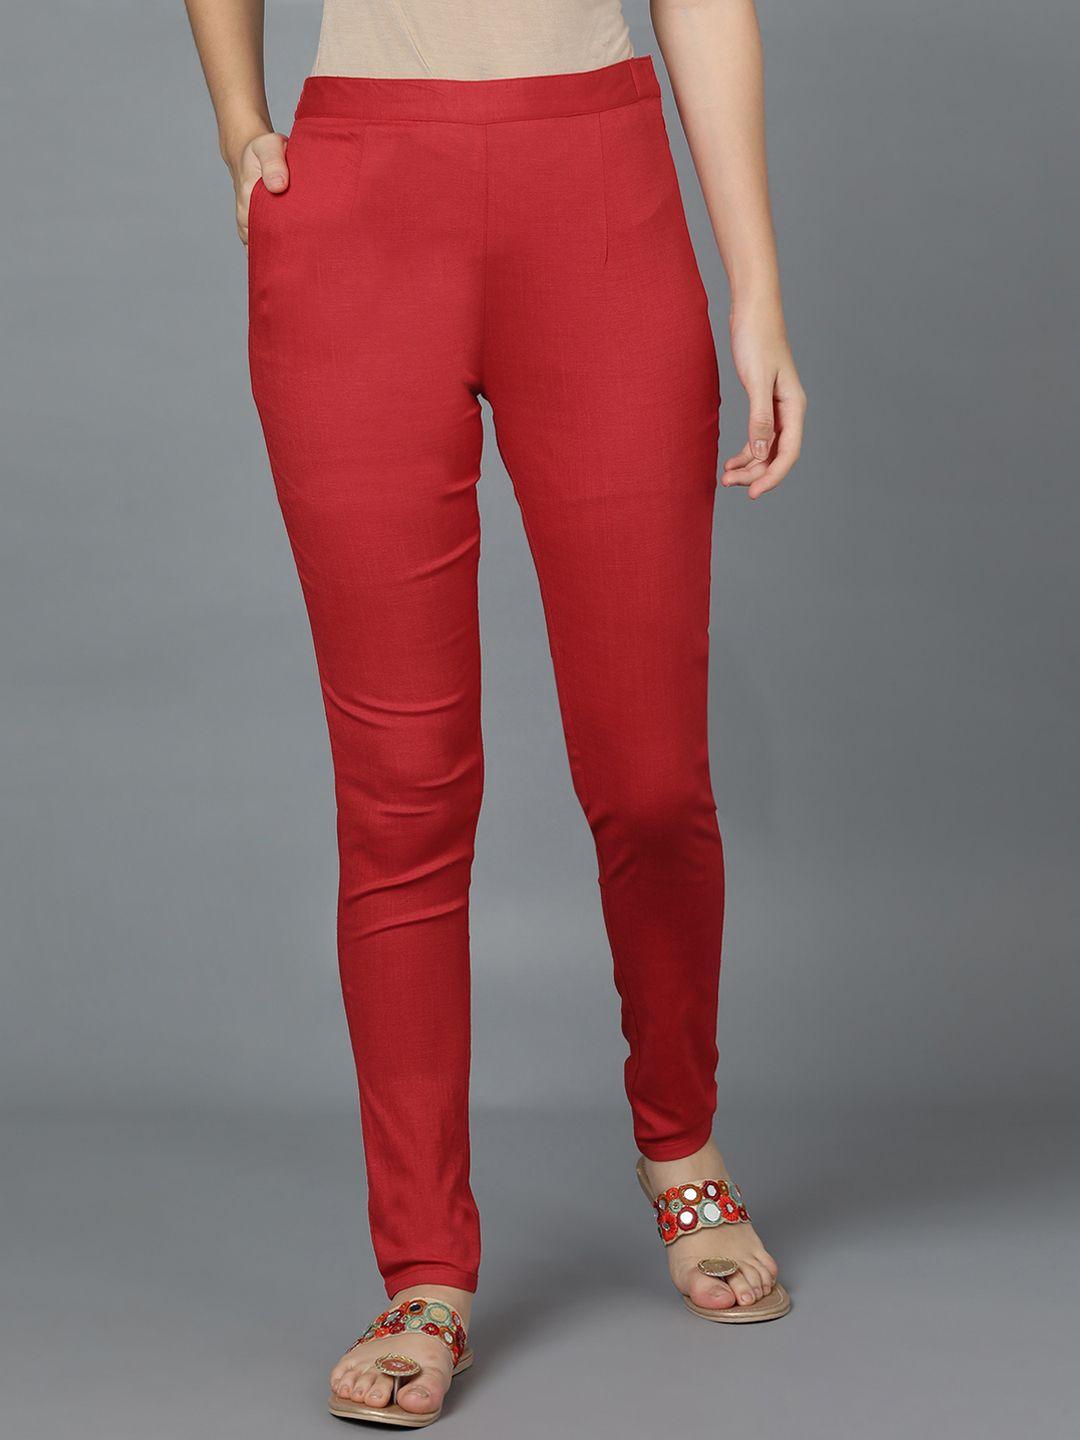 bani women red trousers